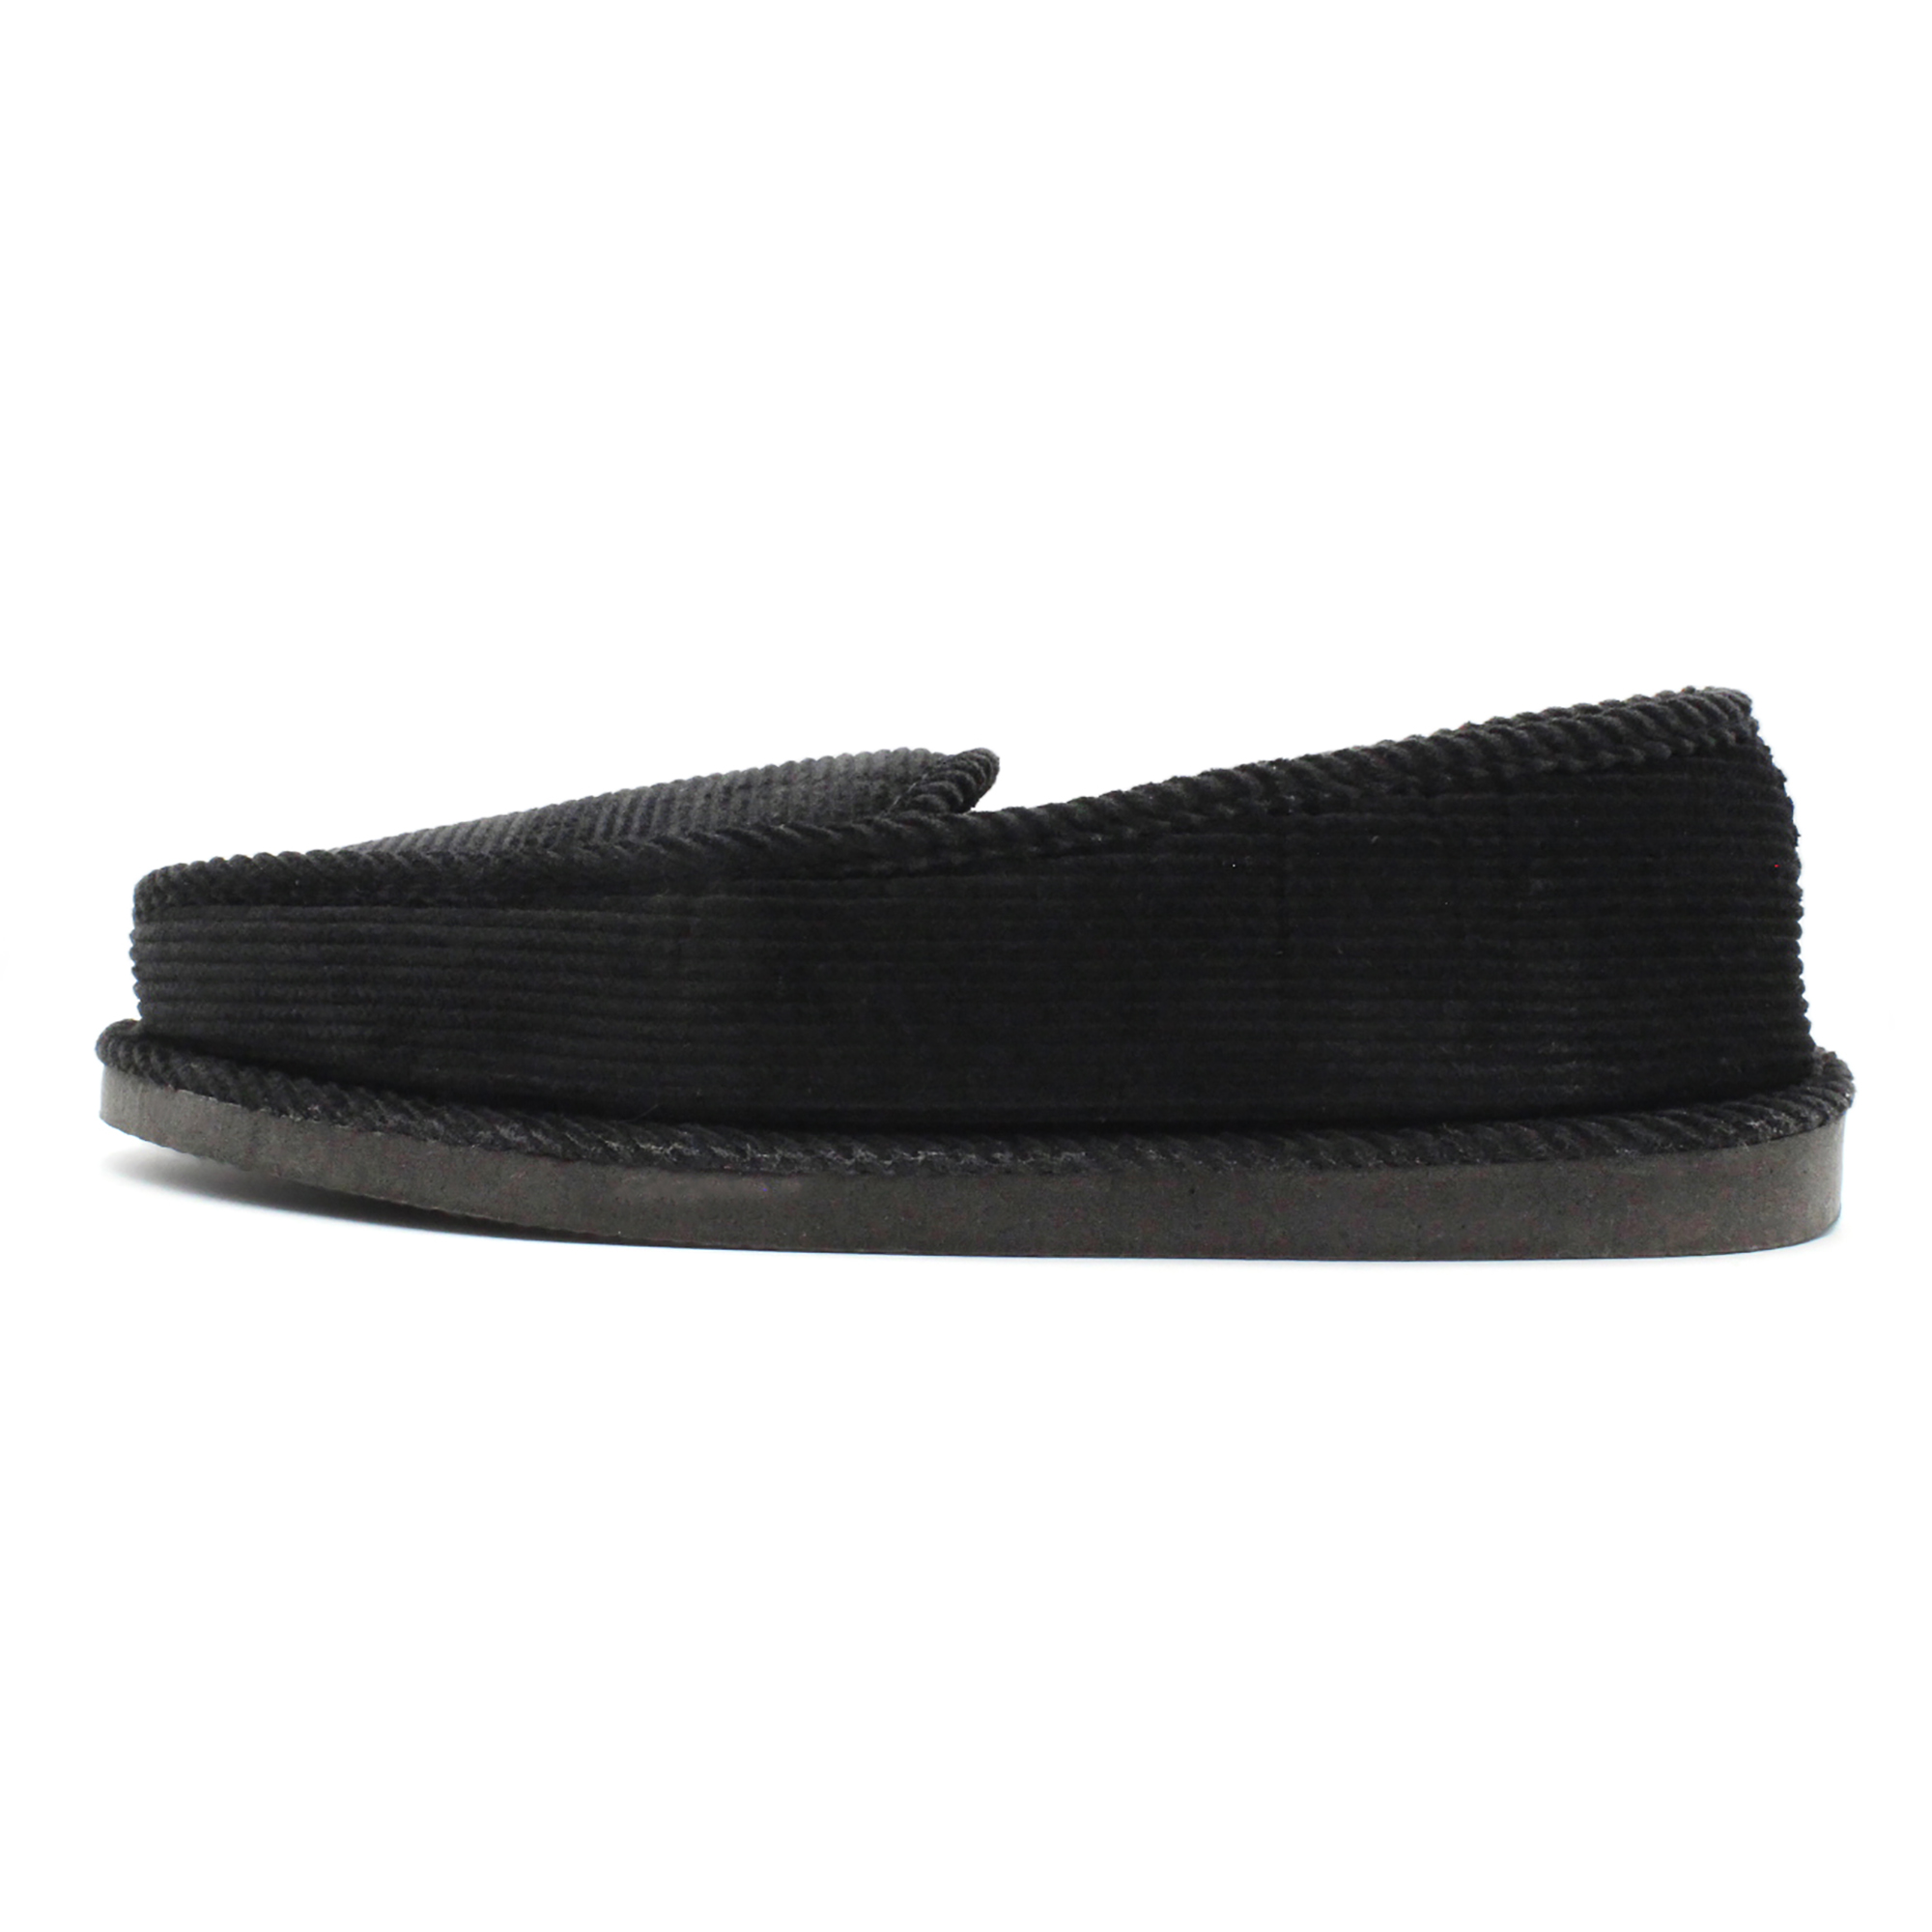 Men's Black House Slippers Comfort Corduroy Moccasin Slip On  Sz 9 